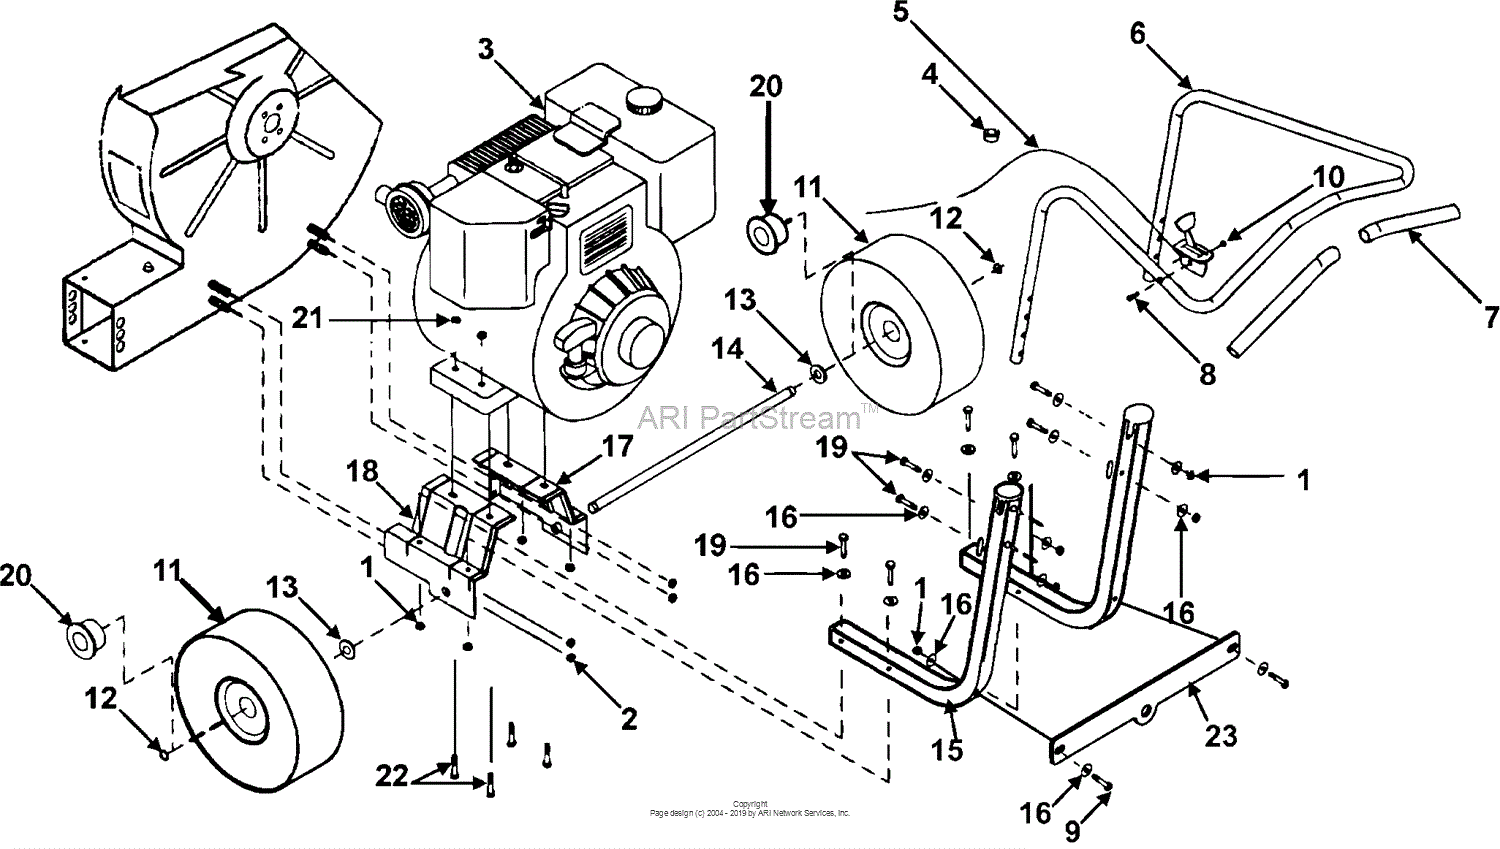 Bunton, Bobcat, Ryan LB1401-00-01 Optimax Blower Parts ... little wonder engine diagrams 